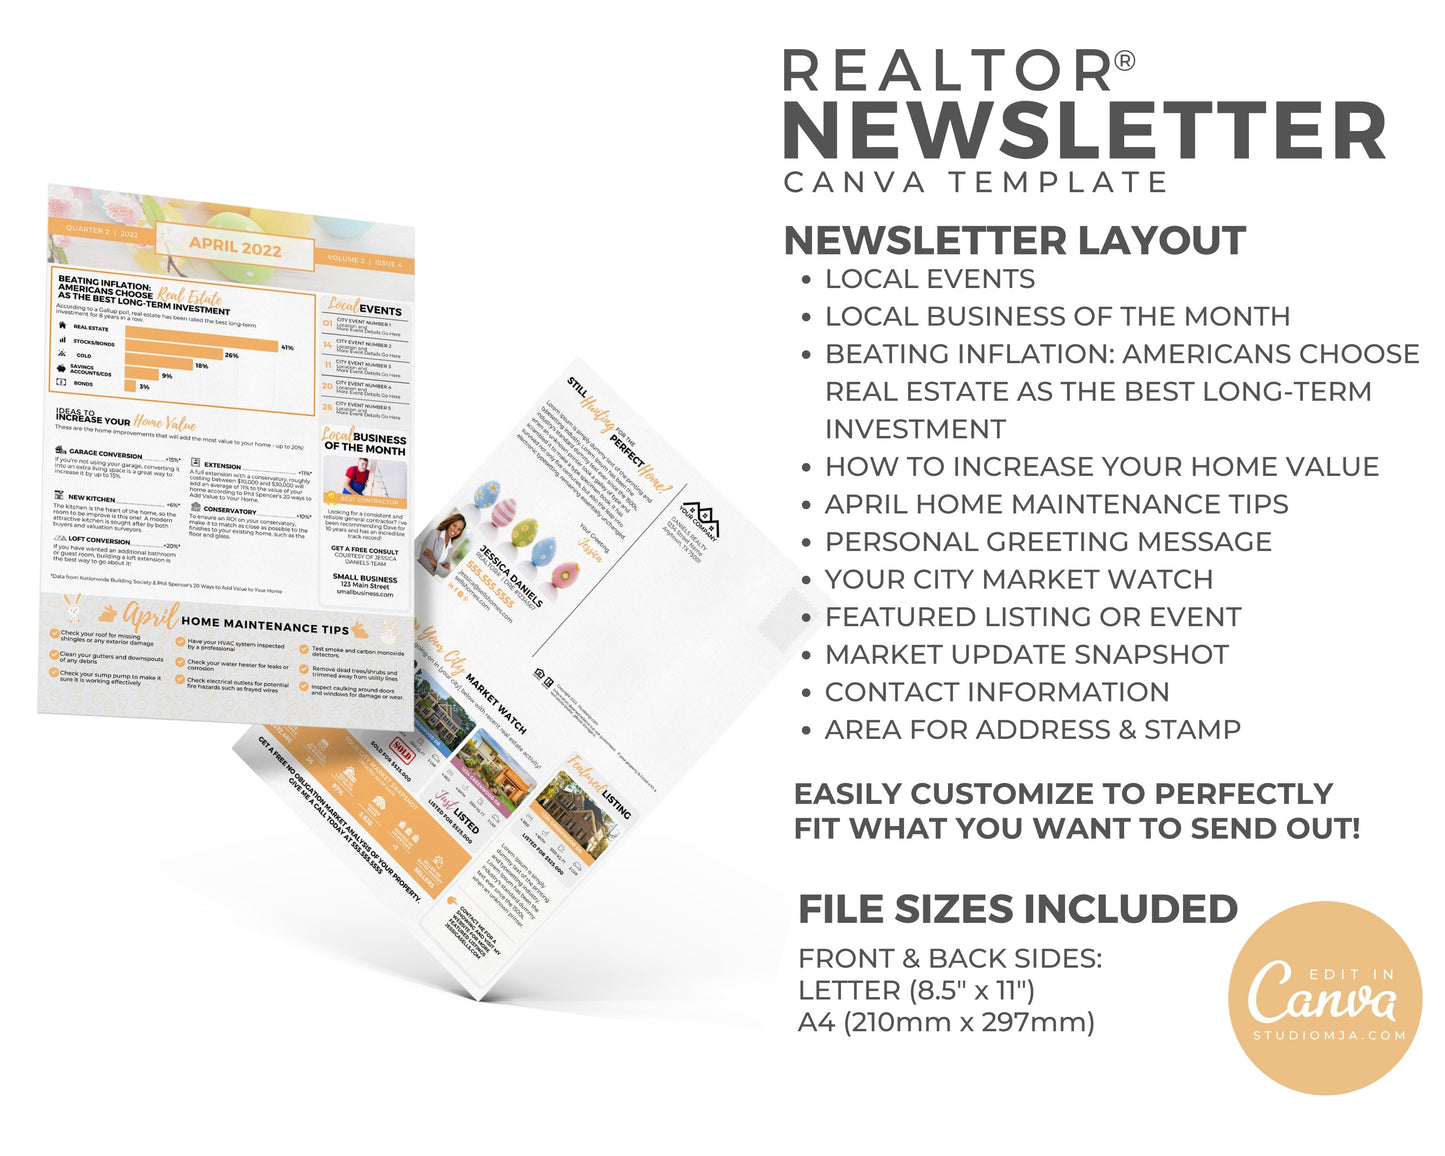 Realtor Newsletter BiFold Template | April 2022